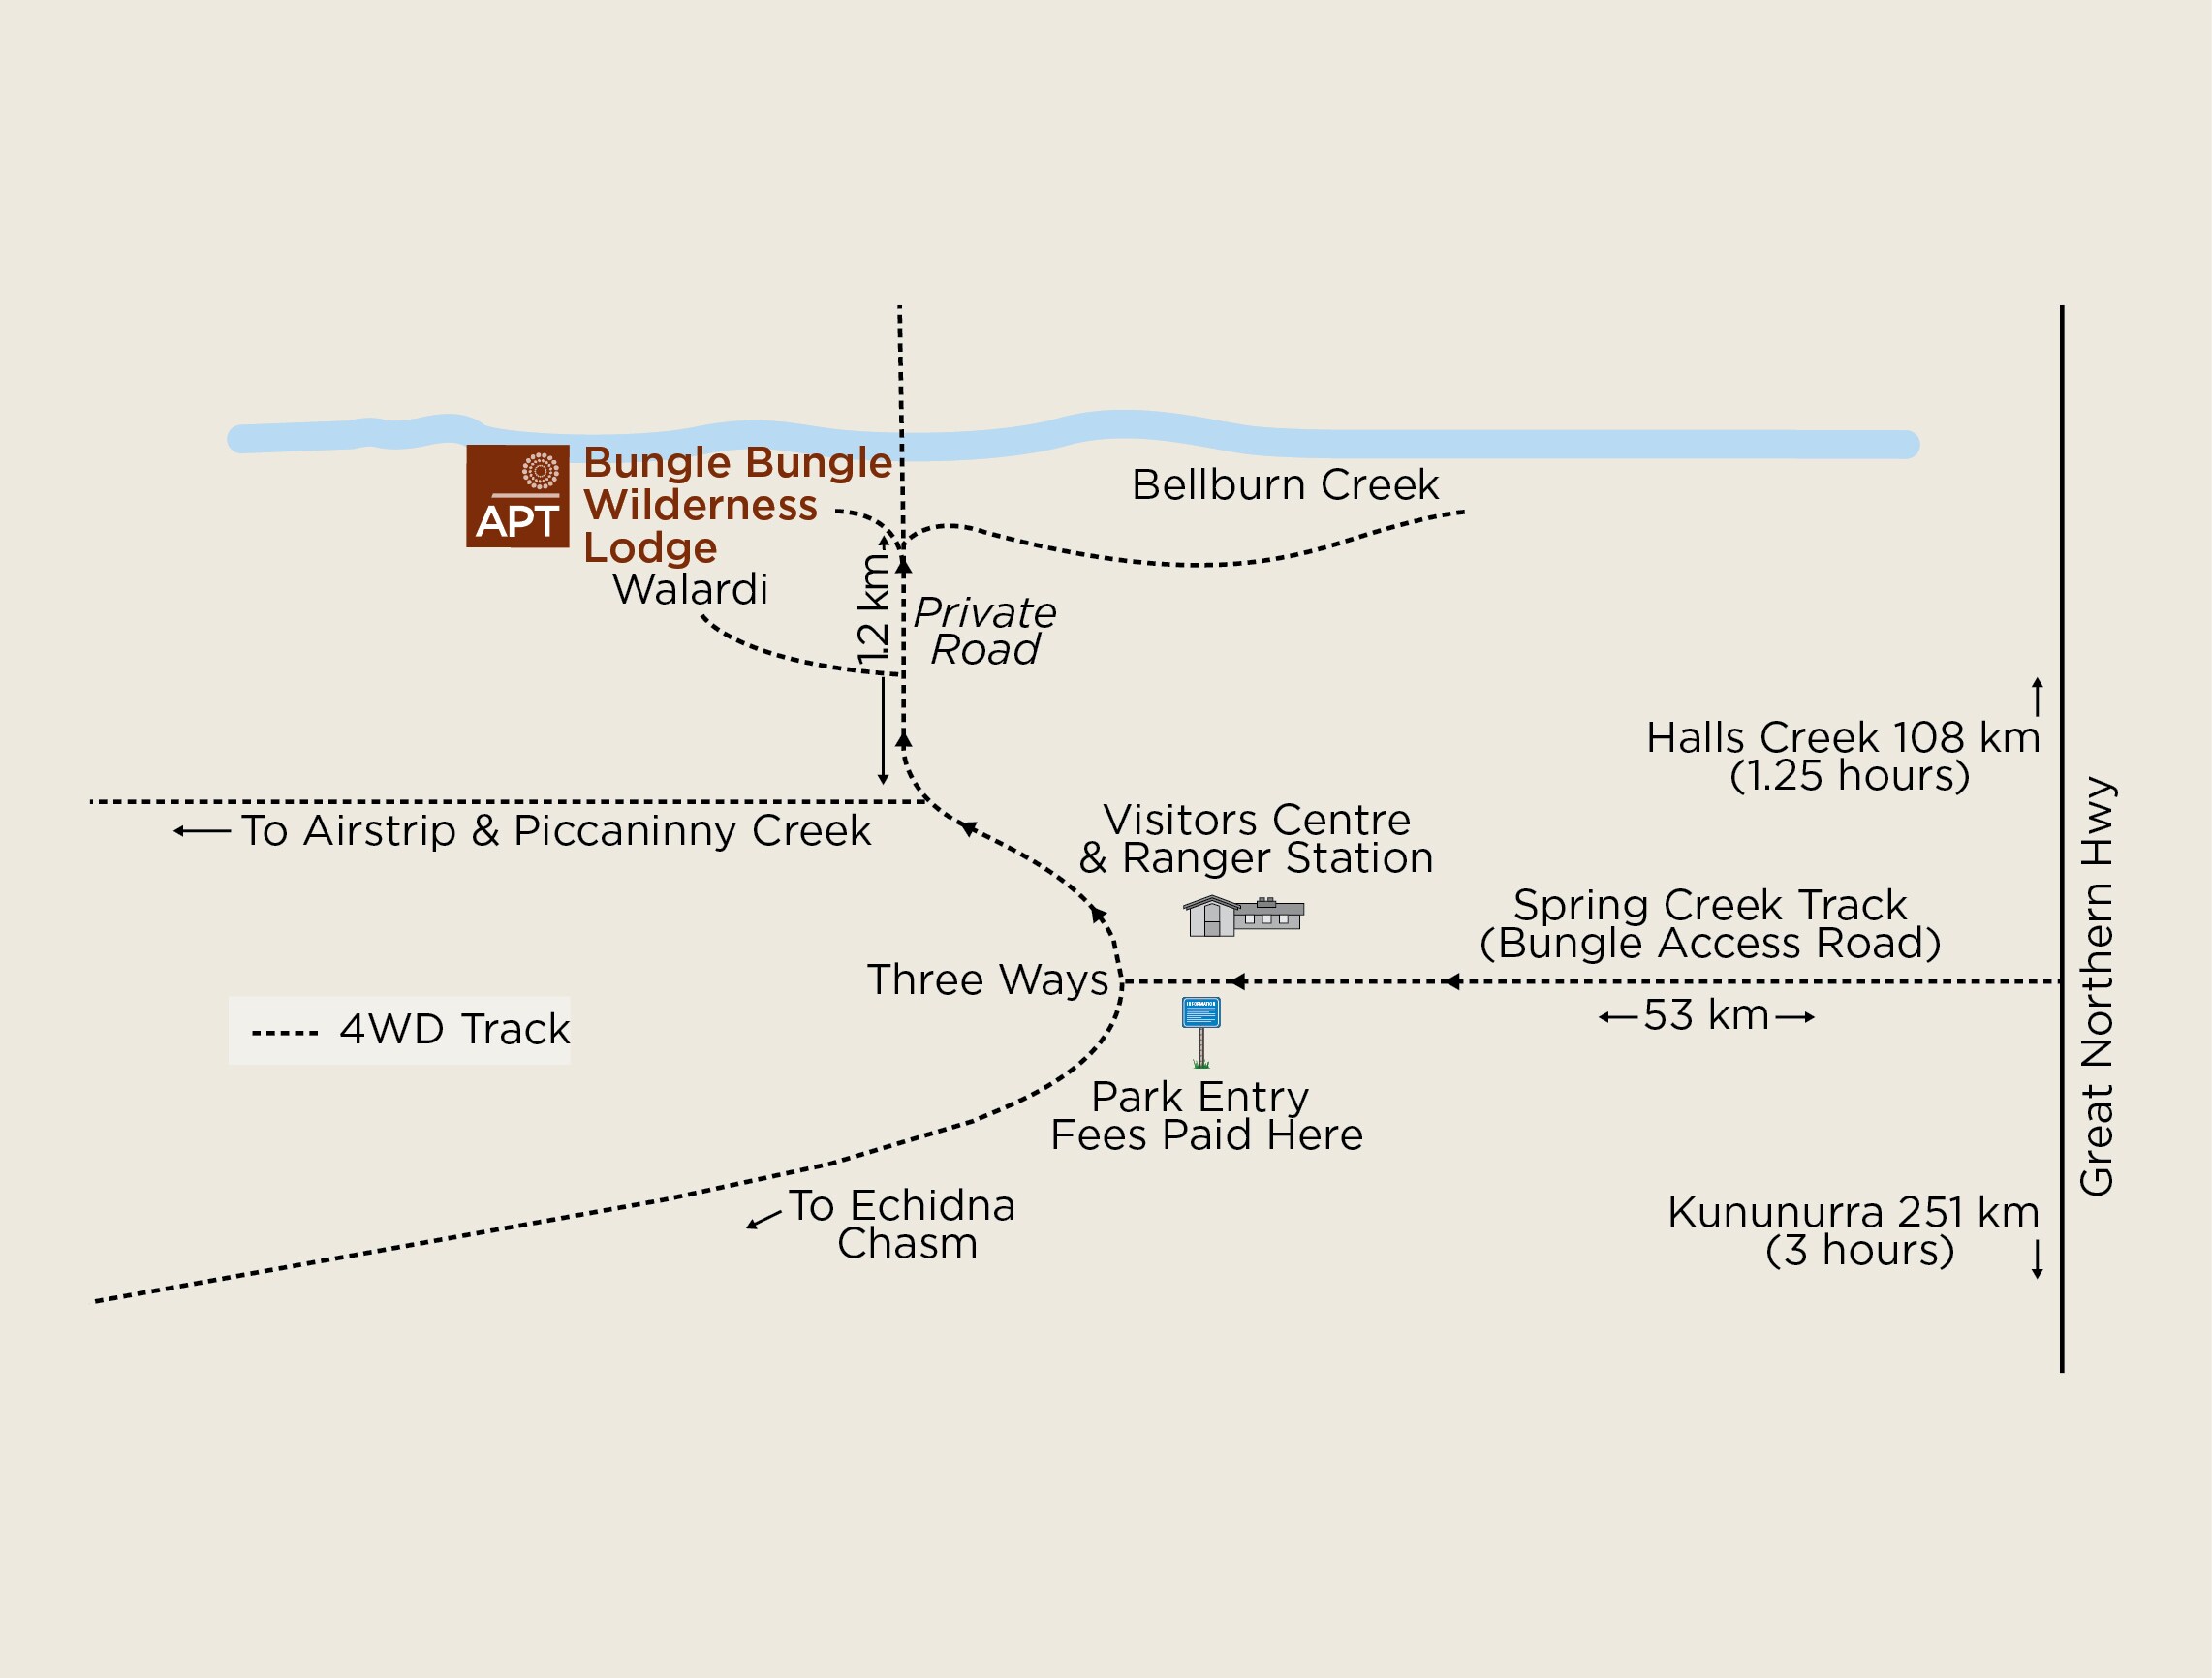 Map to Bungle Bungle Lodge